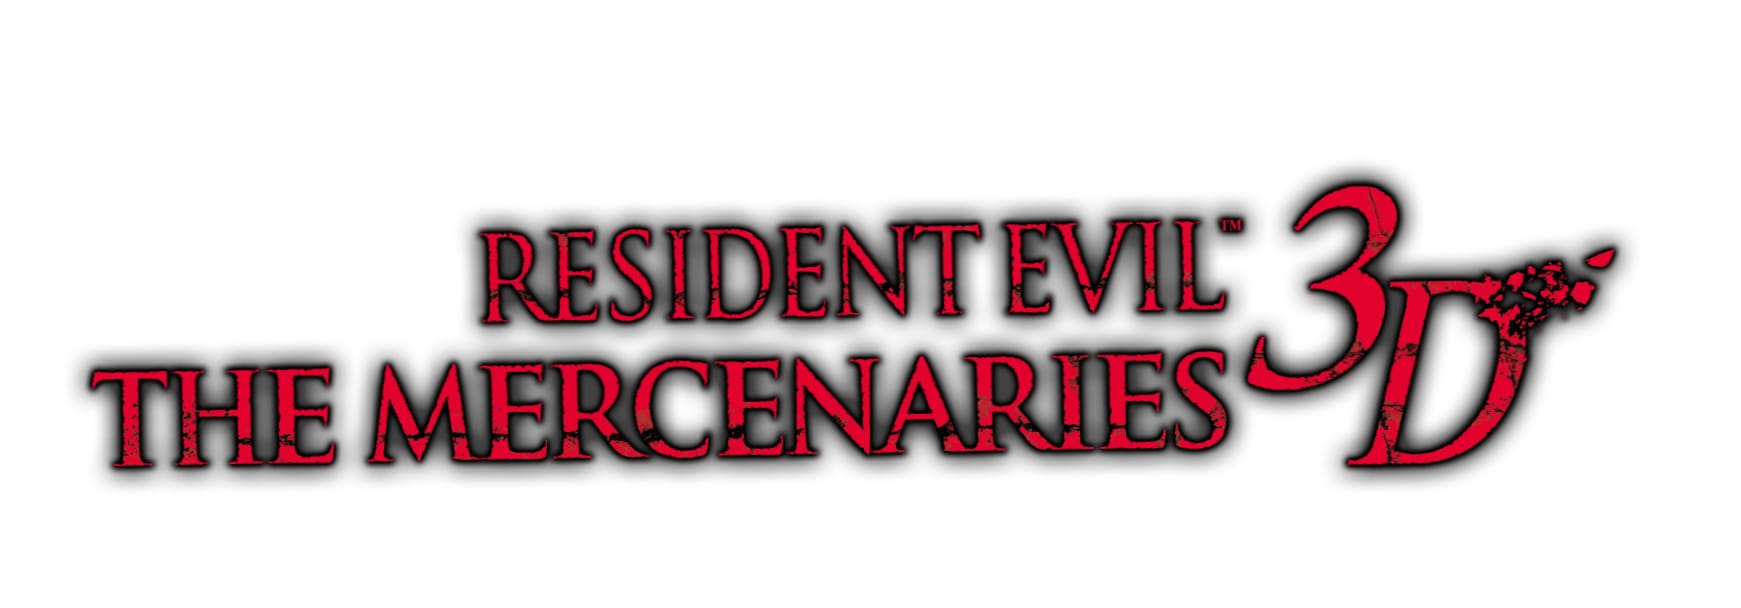 Resident Evil The Mercenaries 3D wallpapers HD quality